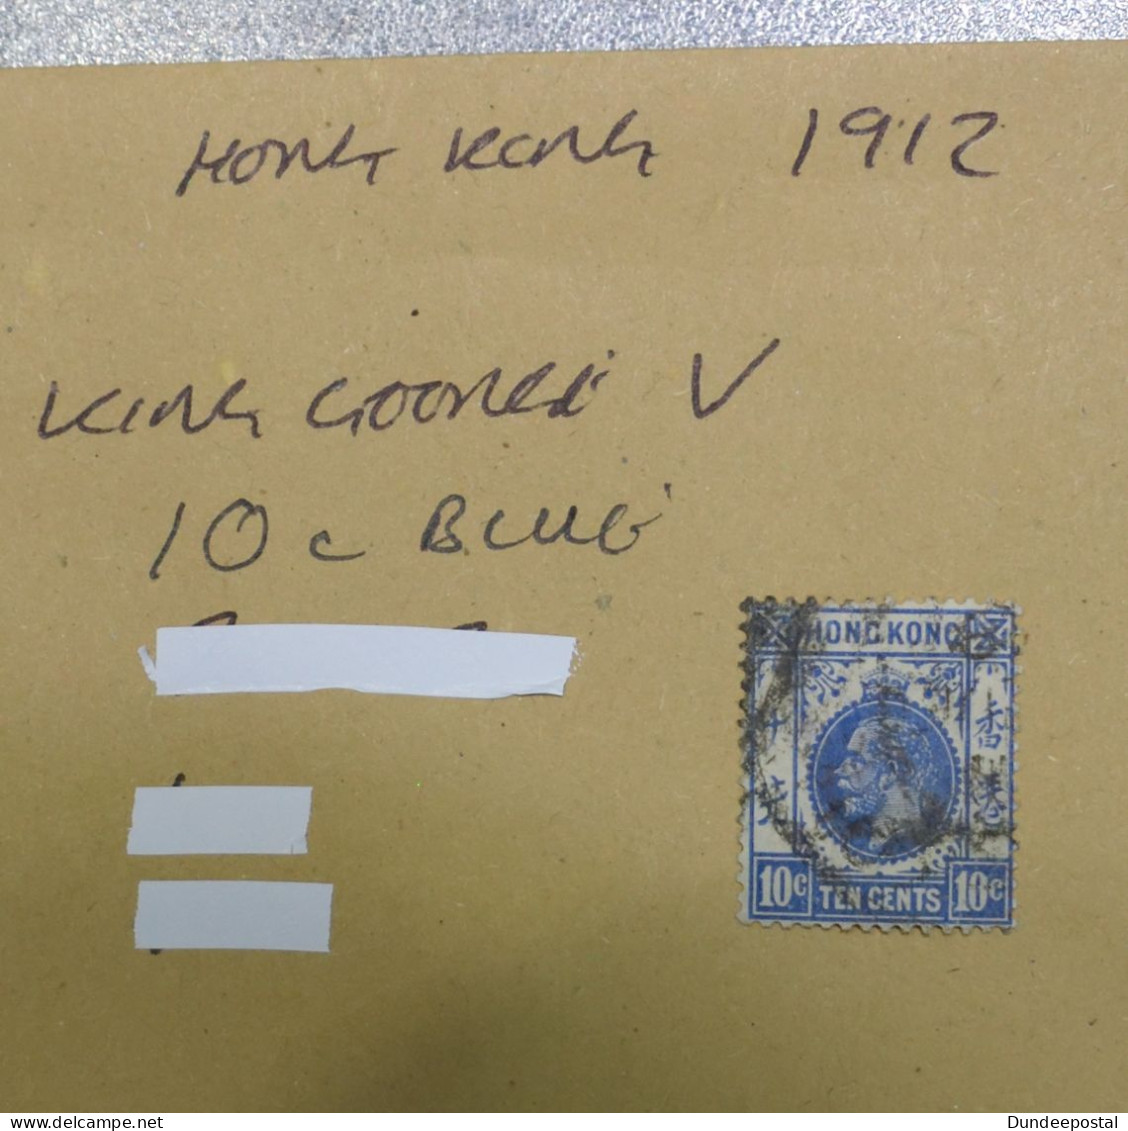 HONG KONG  STAMPS  King George V  1912   ~~L@@K~~ - Used Stamps